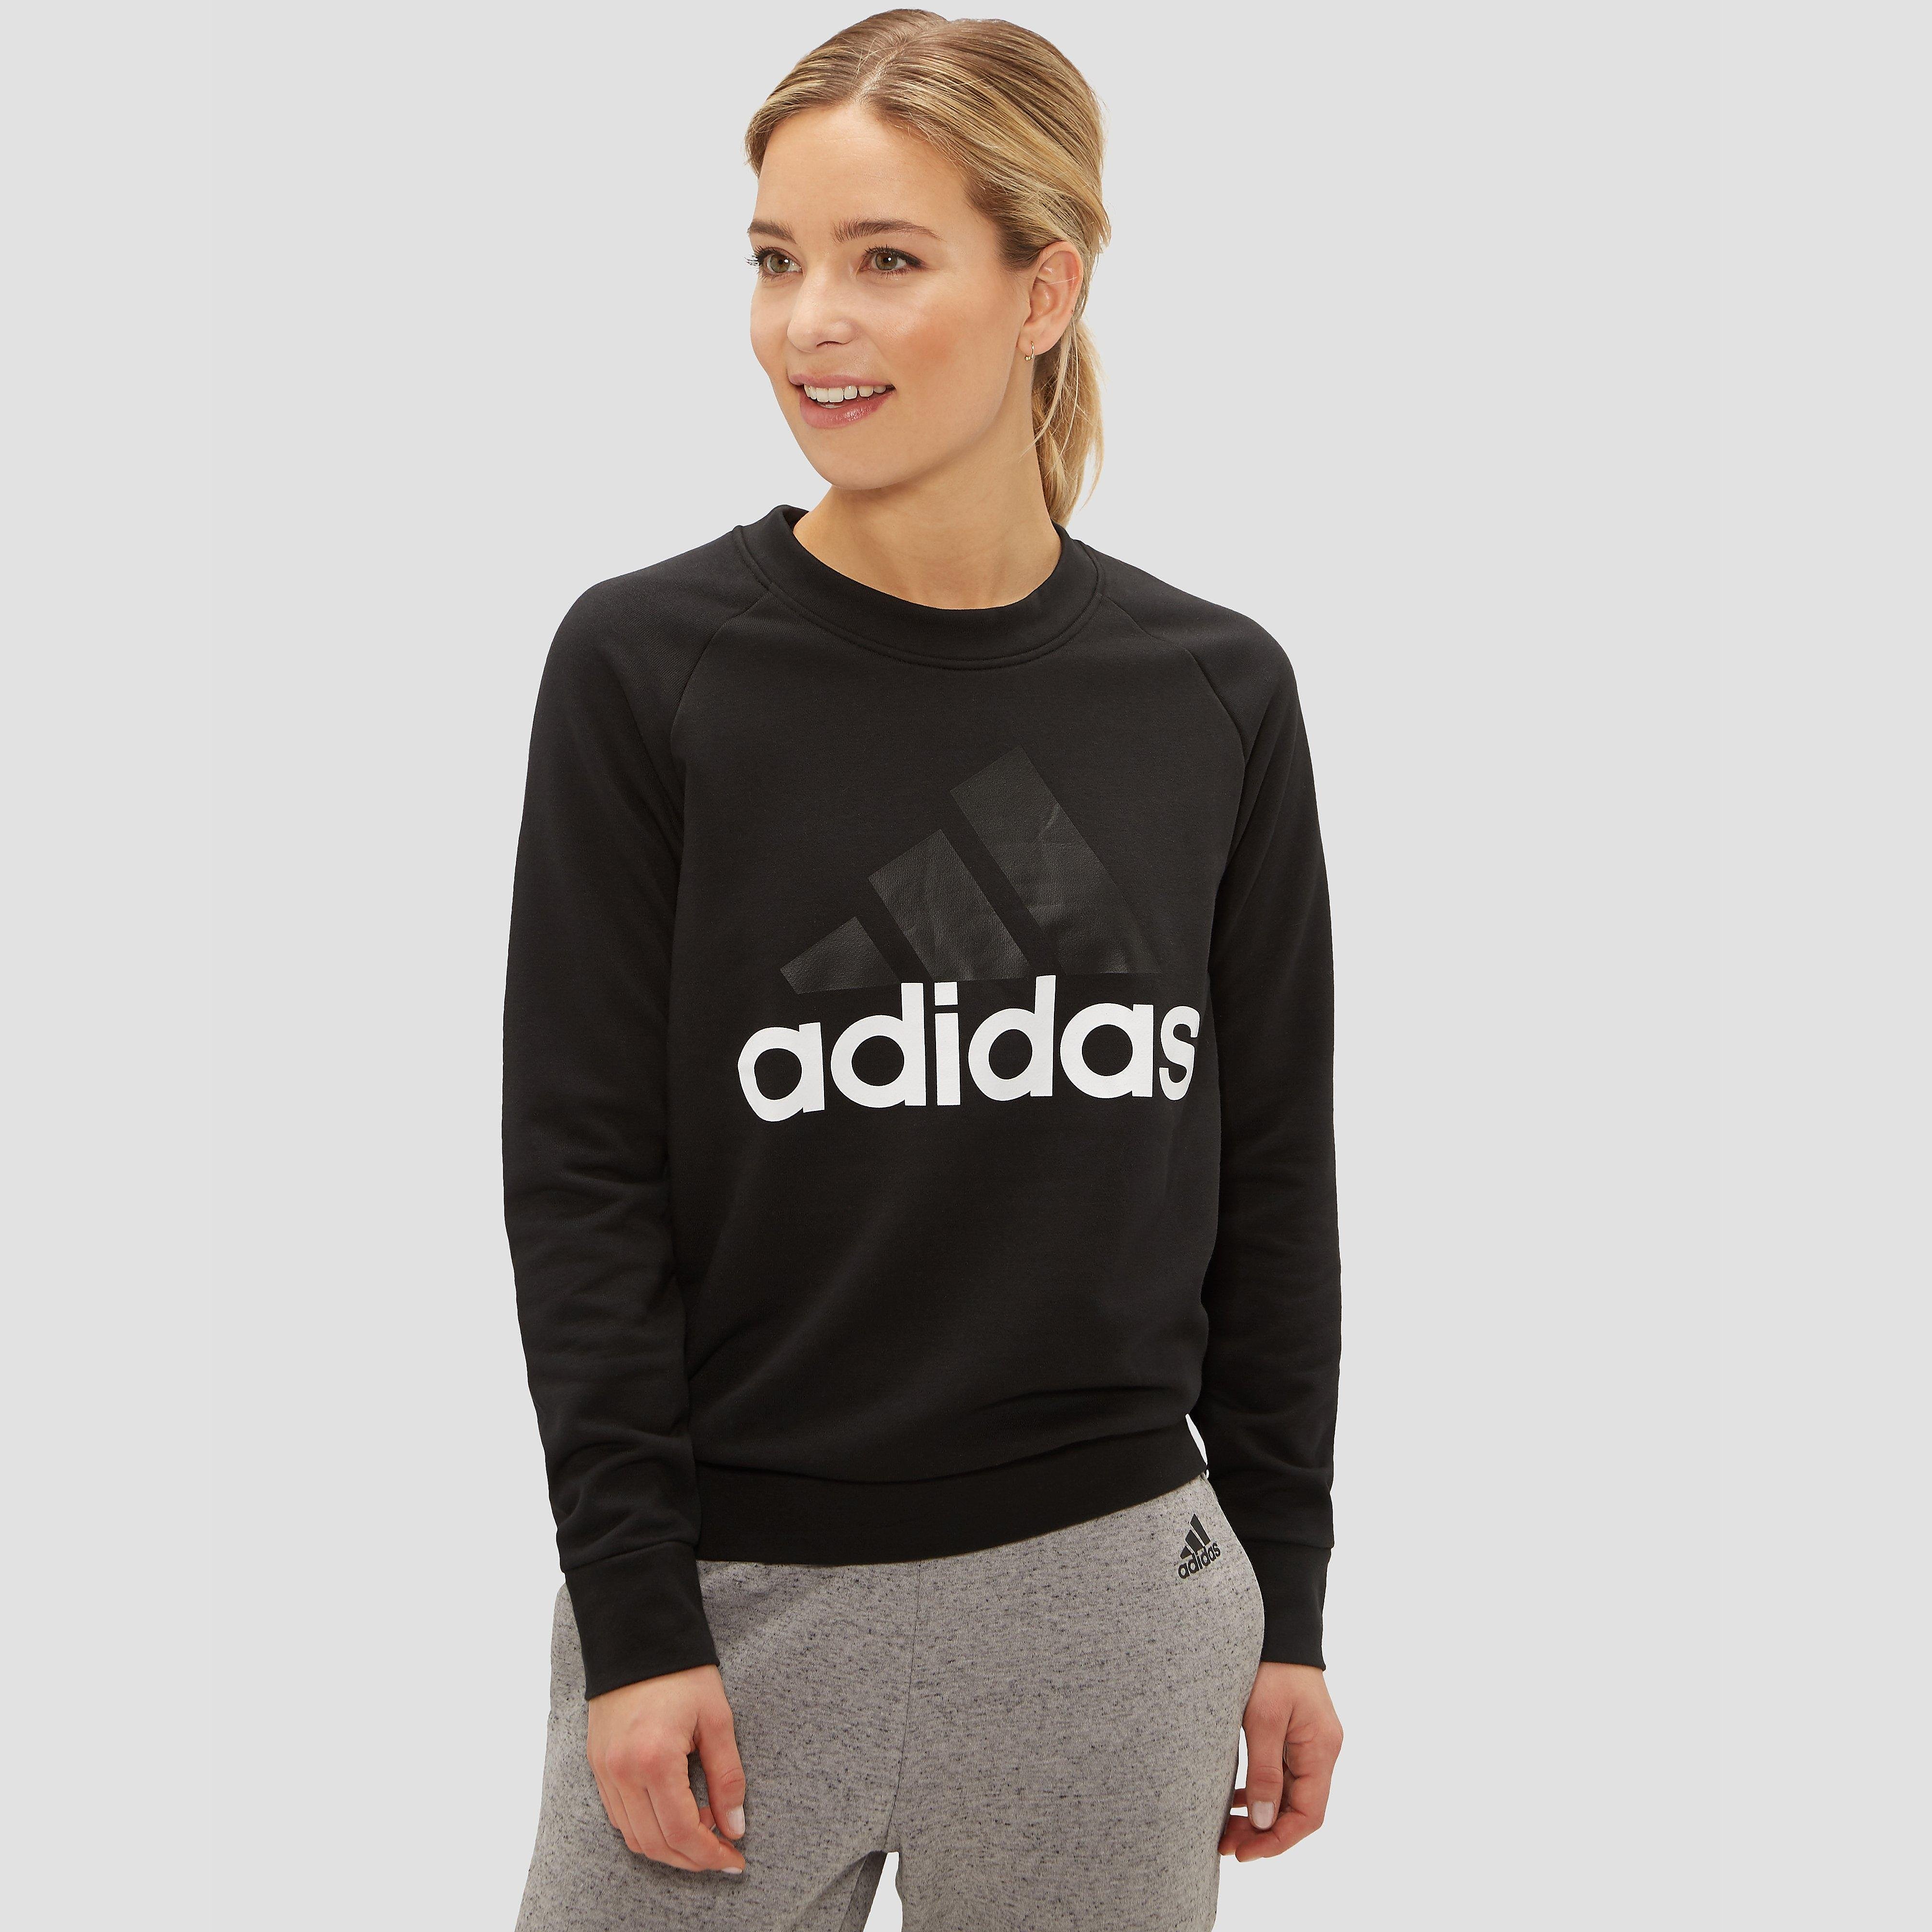 adidas linear sweater | Online kopen via Skishop4u.nl | Decathlon.nl